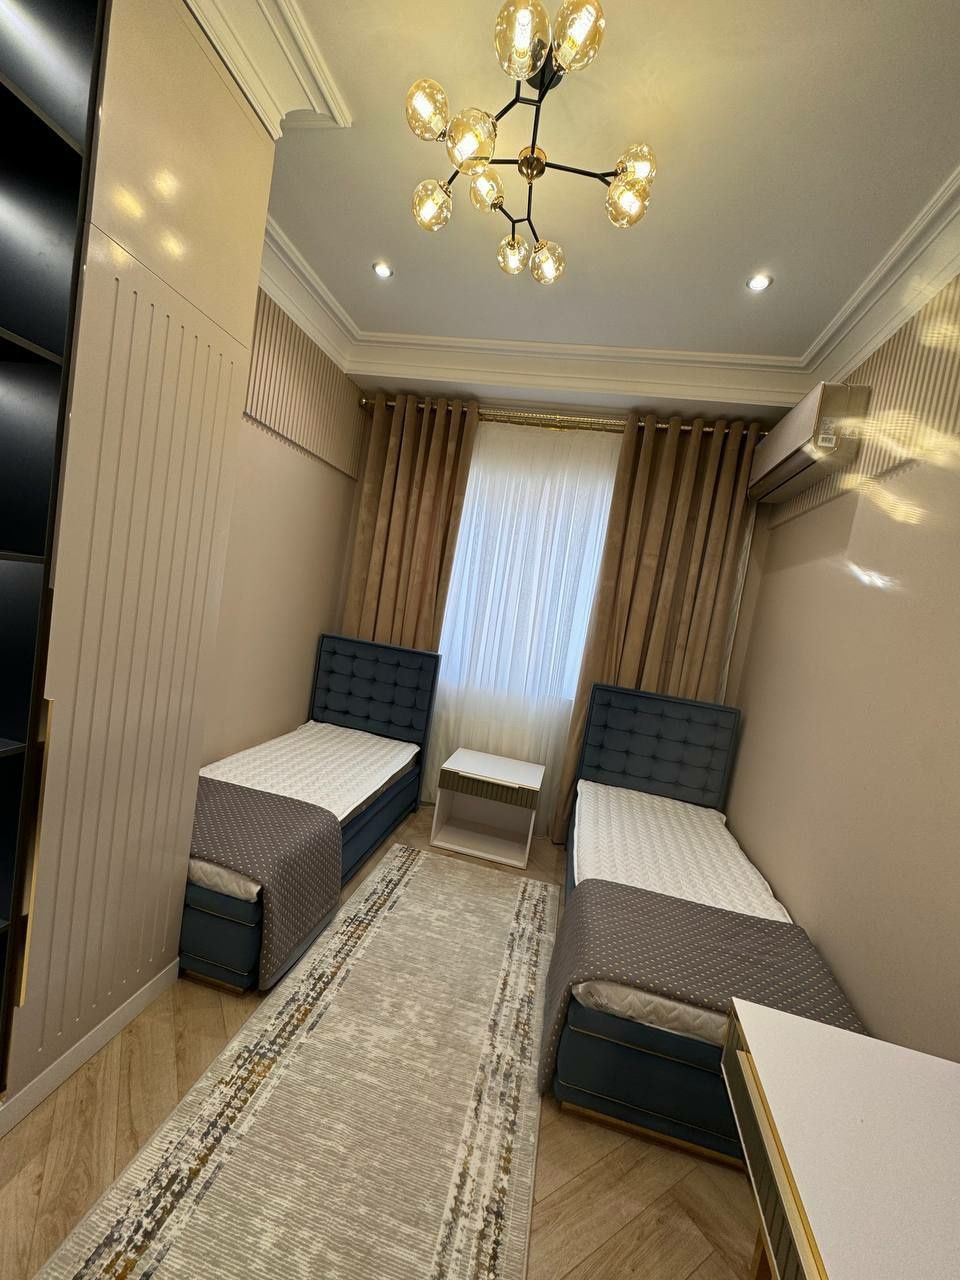 Продаётся квартира 3-х комнатный,8-этаж,91м2 жк"Gardens R."Tashkent ci